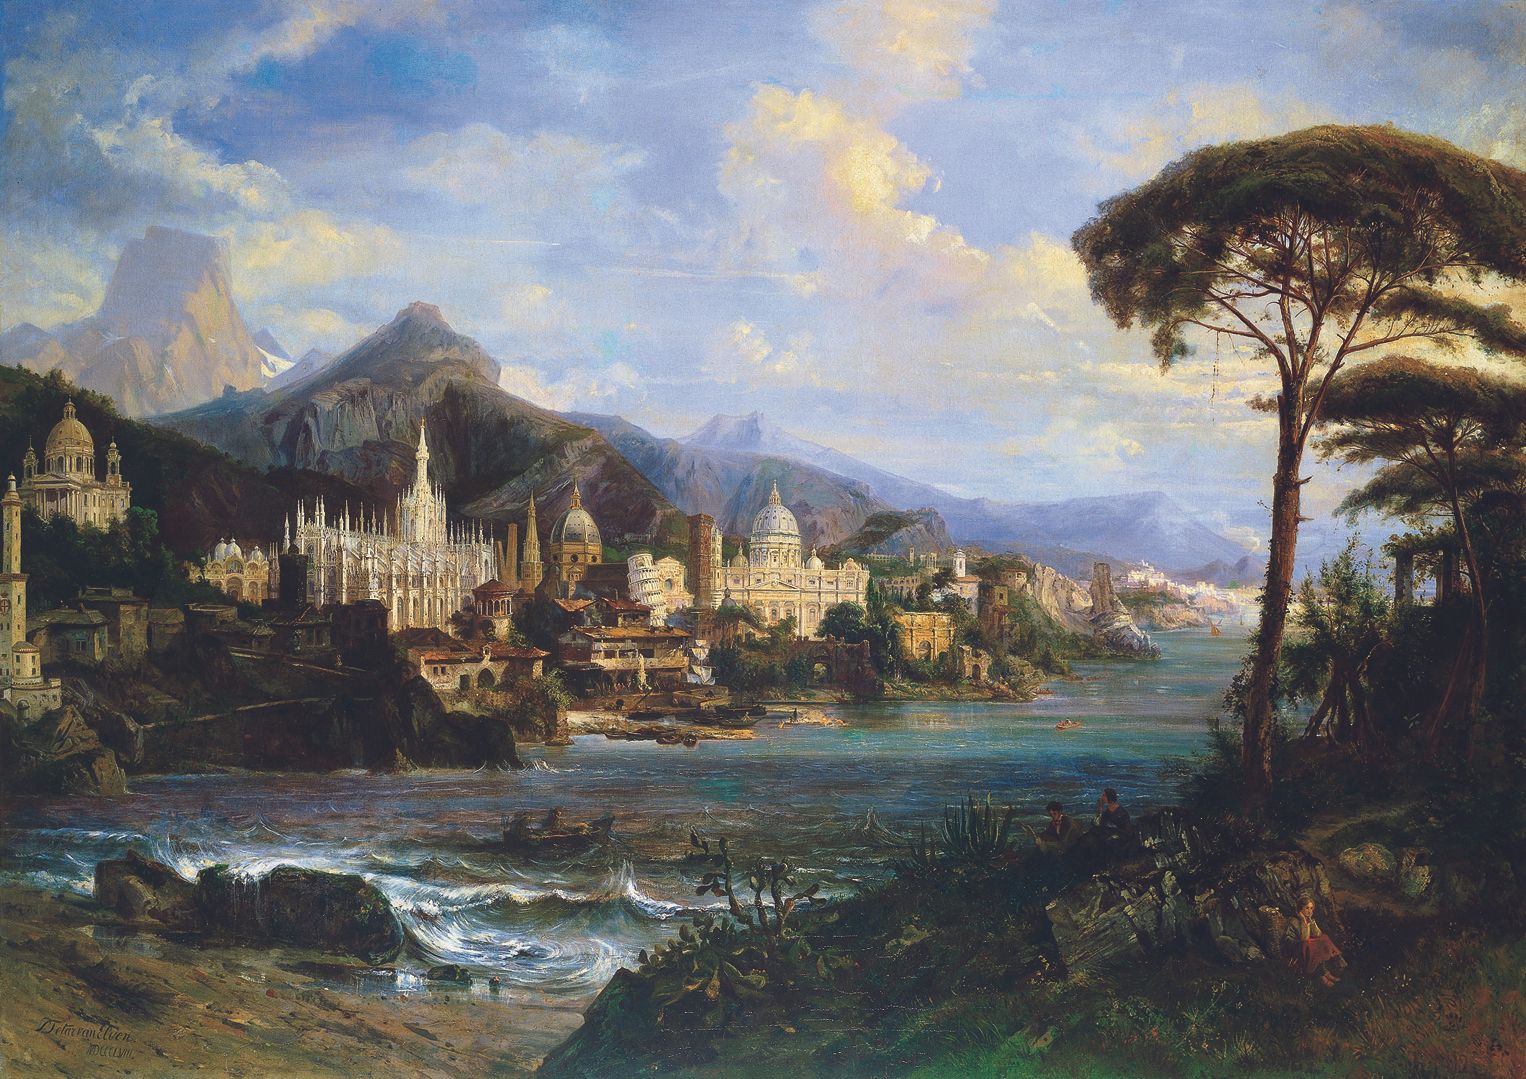 Petrus Henricus Theodor Tetar van Elven, Fantastic Views and City Views in Nineteenth-Century Art (1858; oil on canvas, 252 x 353 cm; Genoa, Gallery of Modern Art)